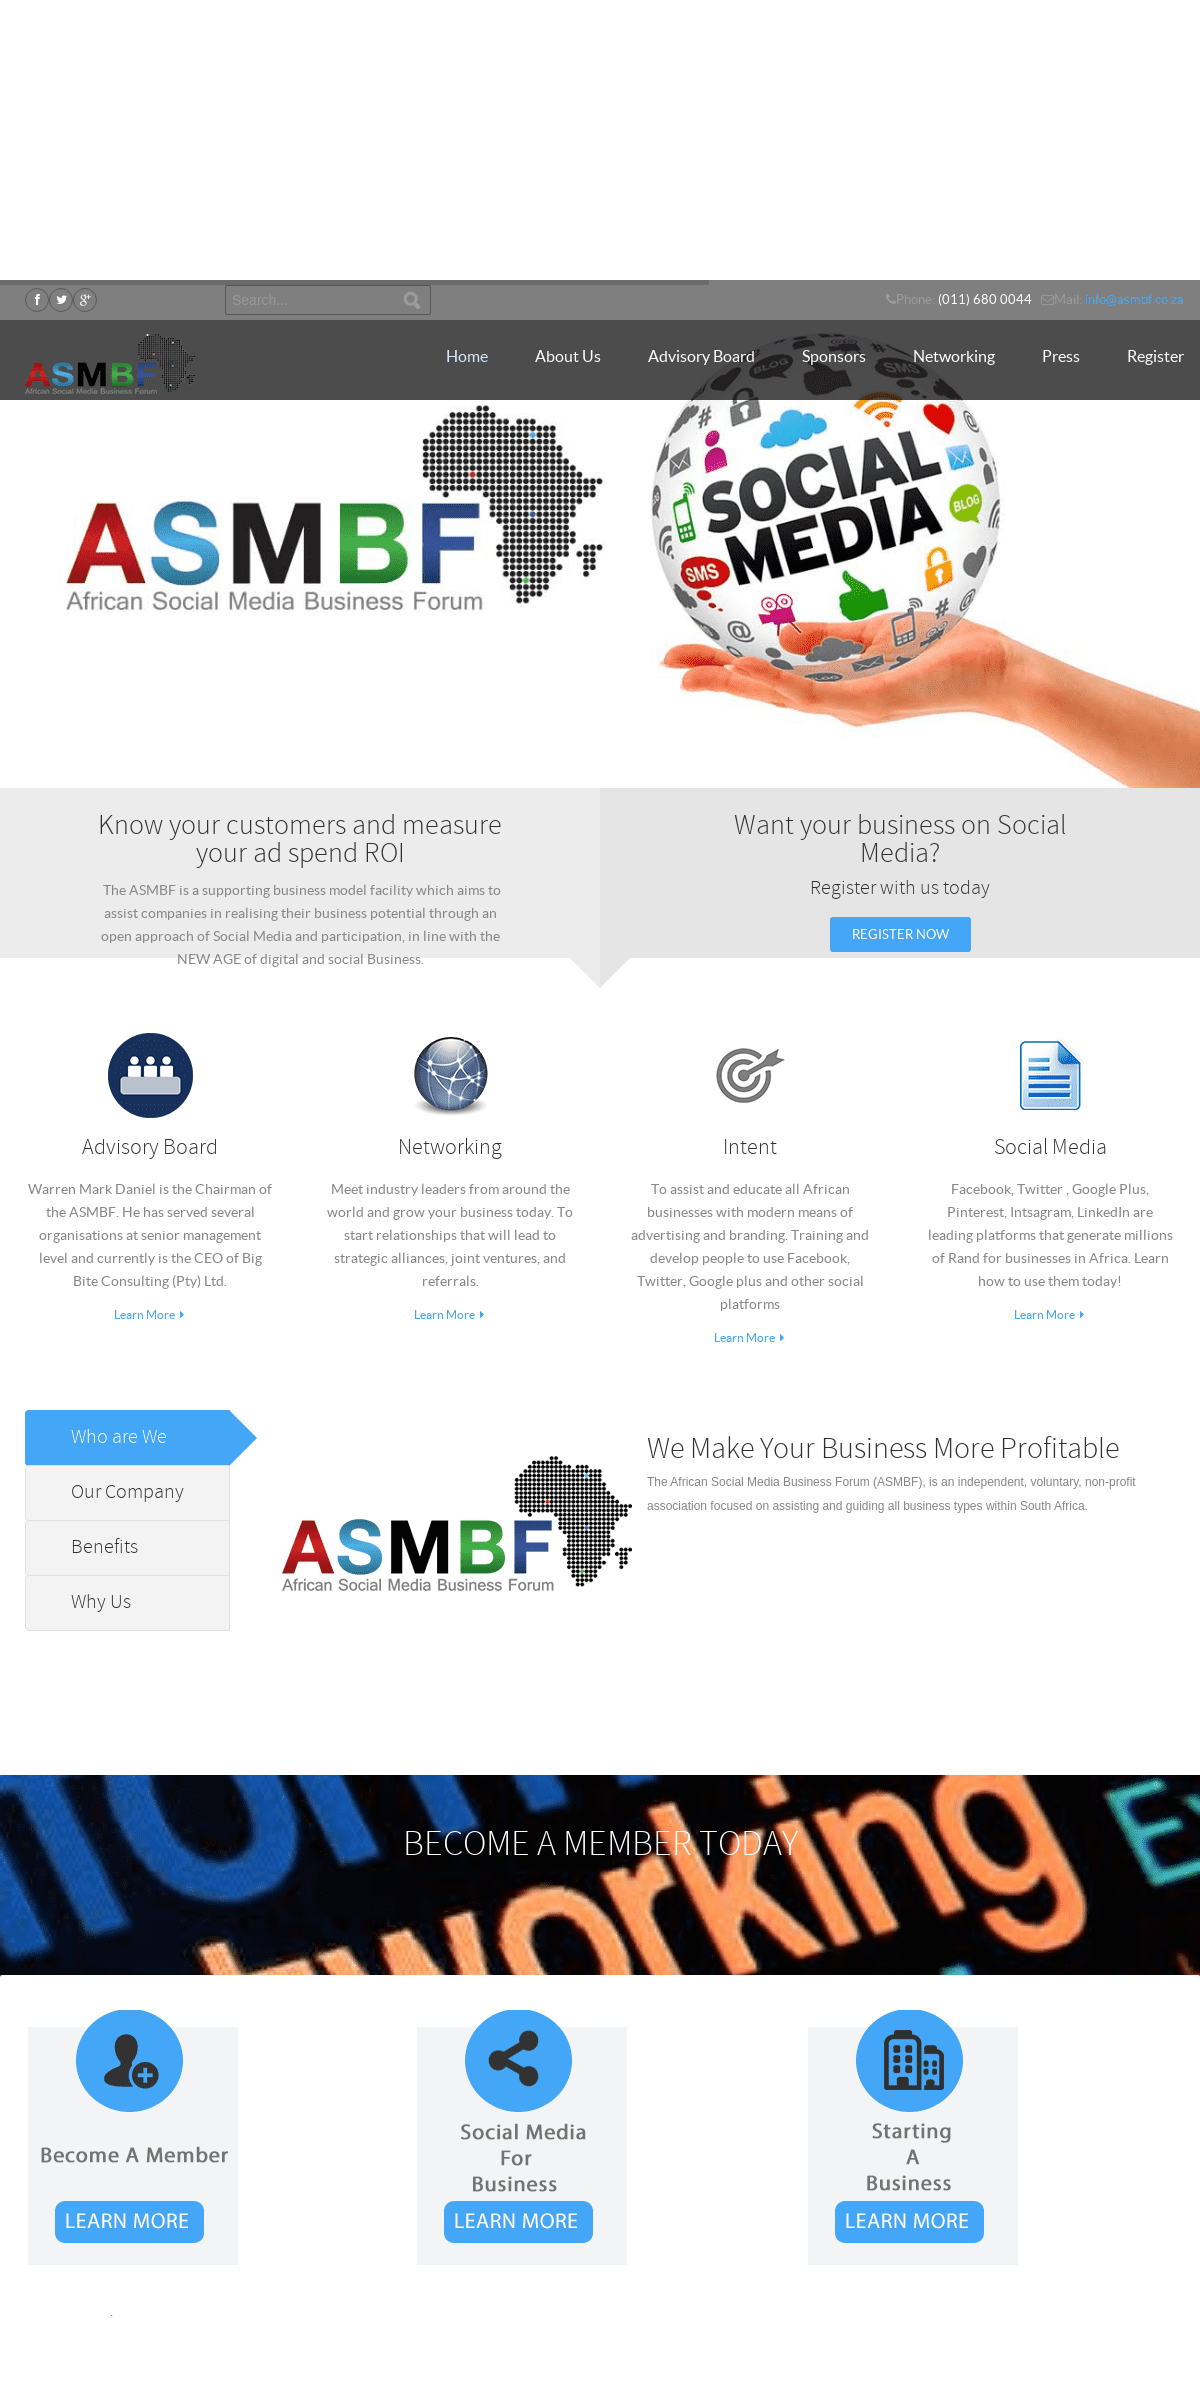 A complete backup of asmbf.co.za